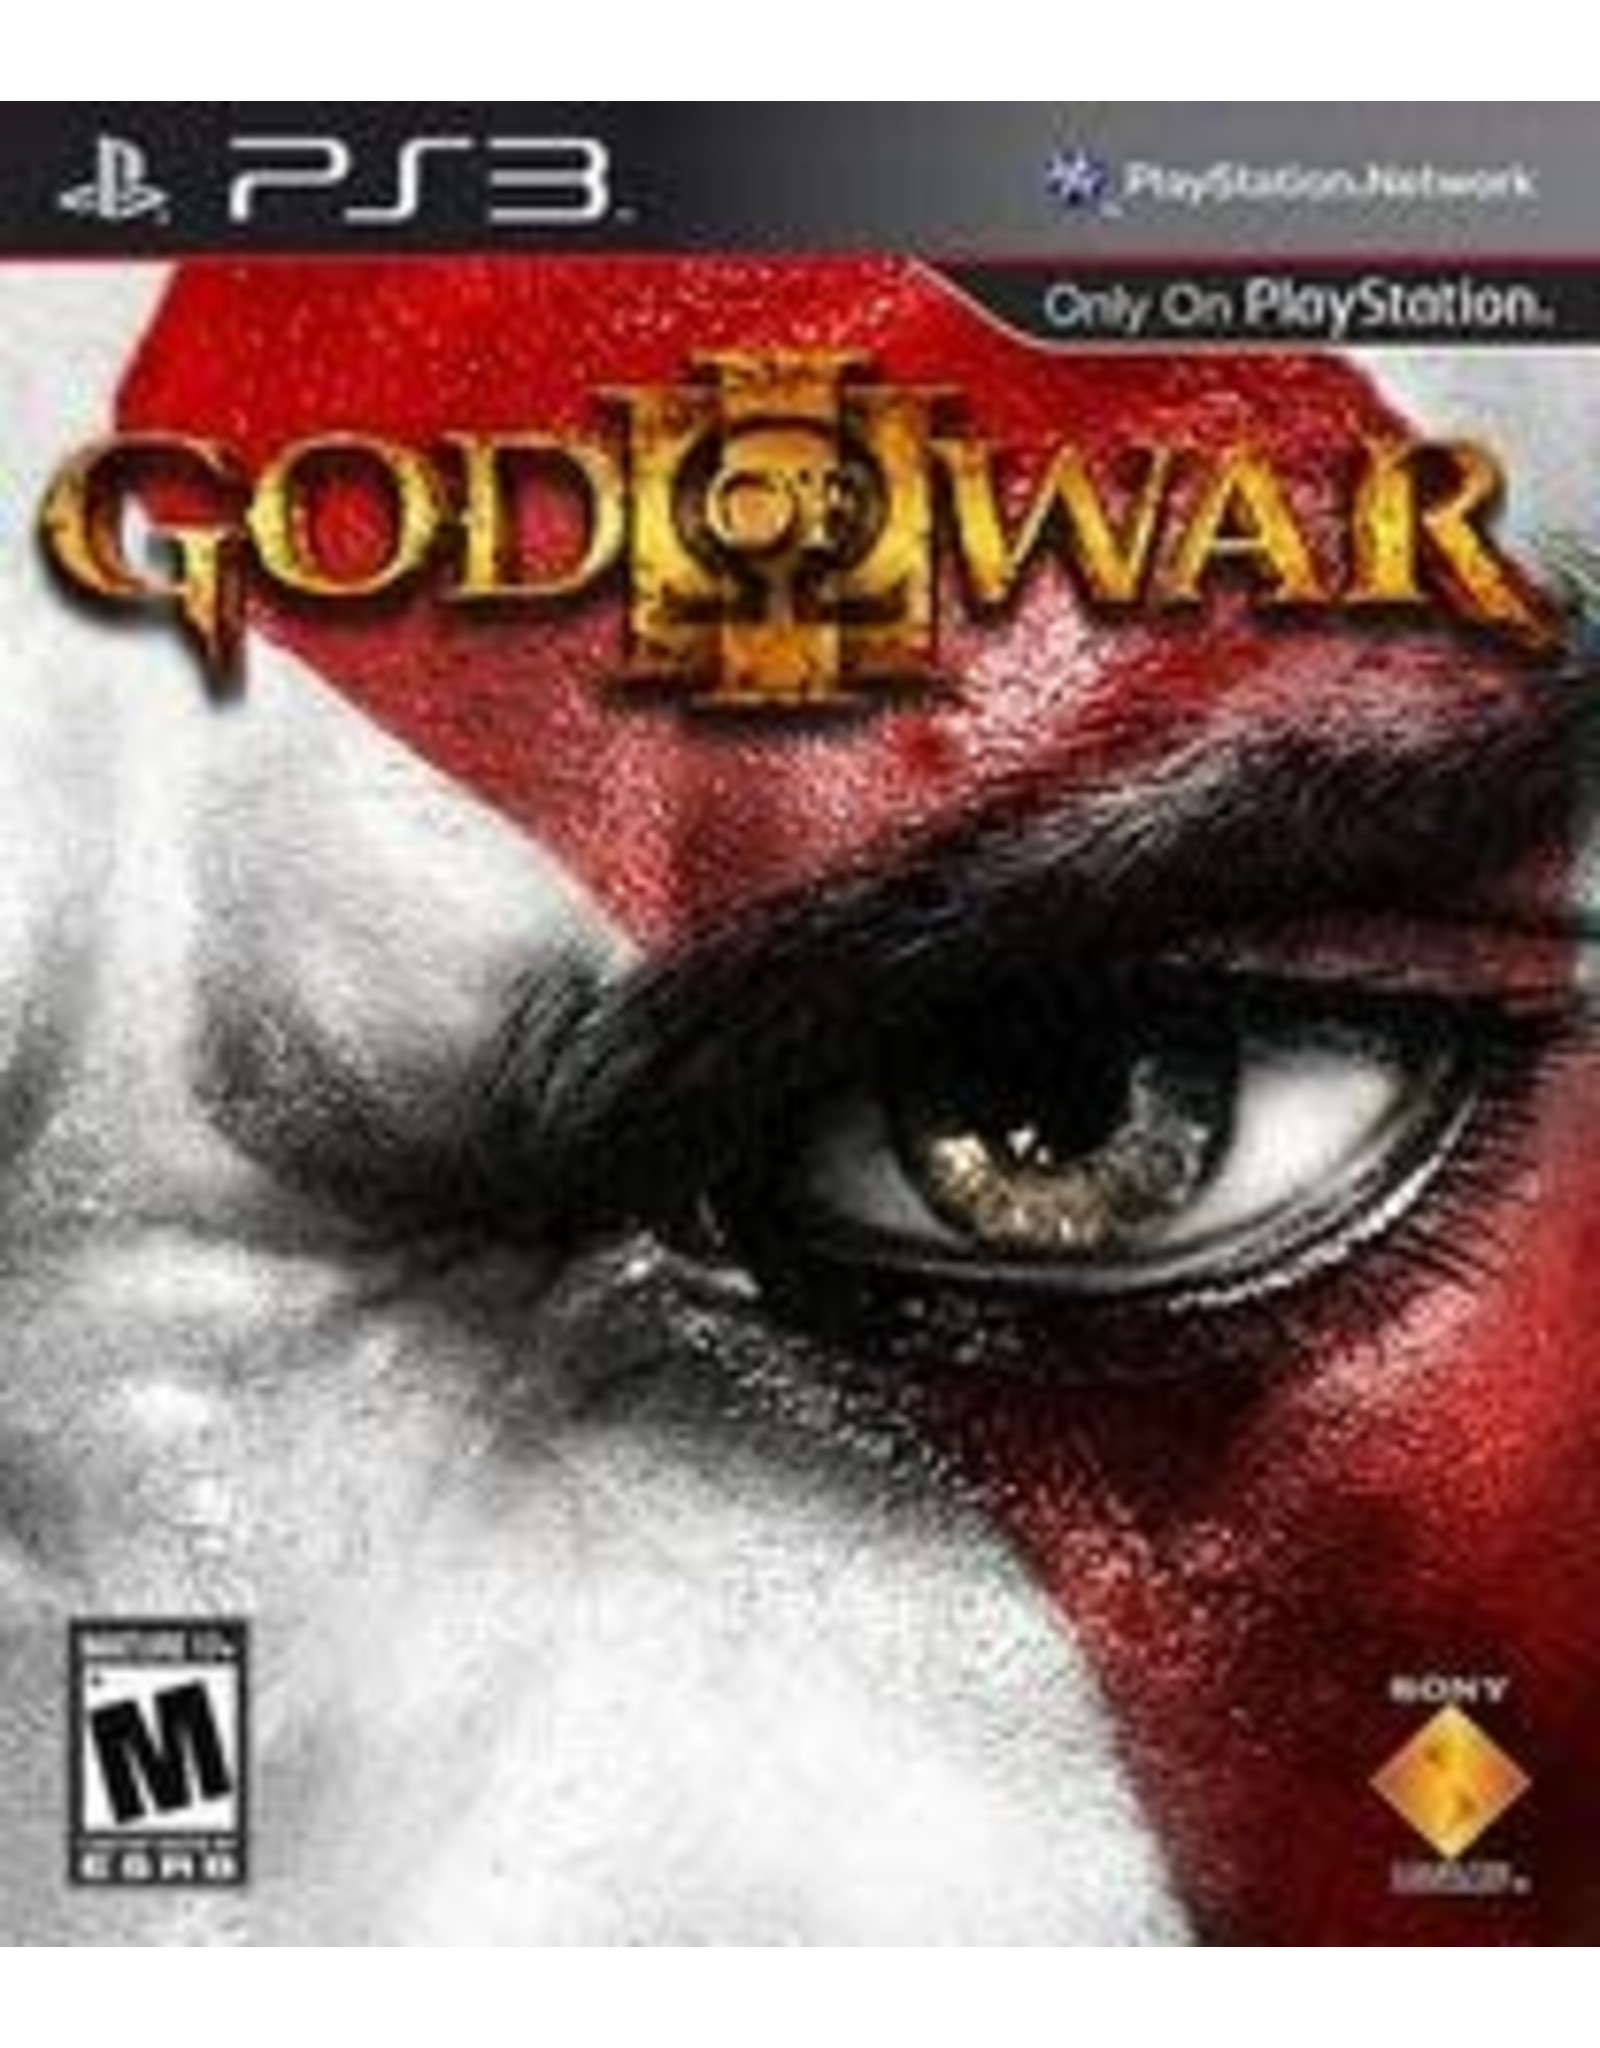 Playstation 3 God of War III (Brand New)